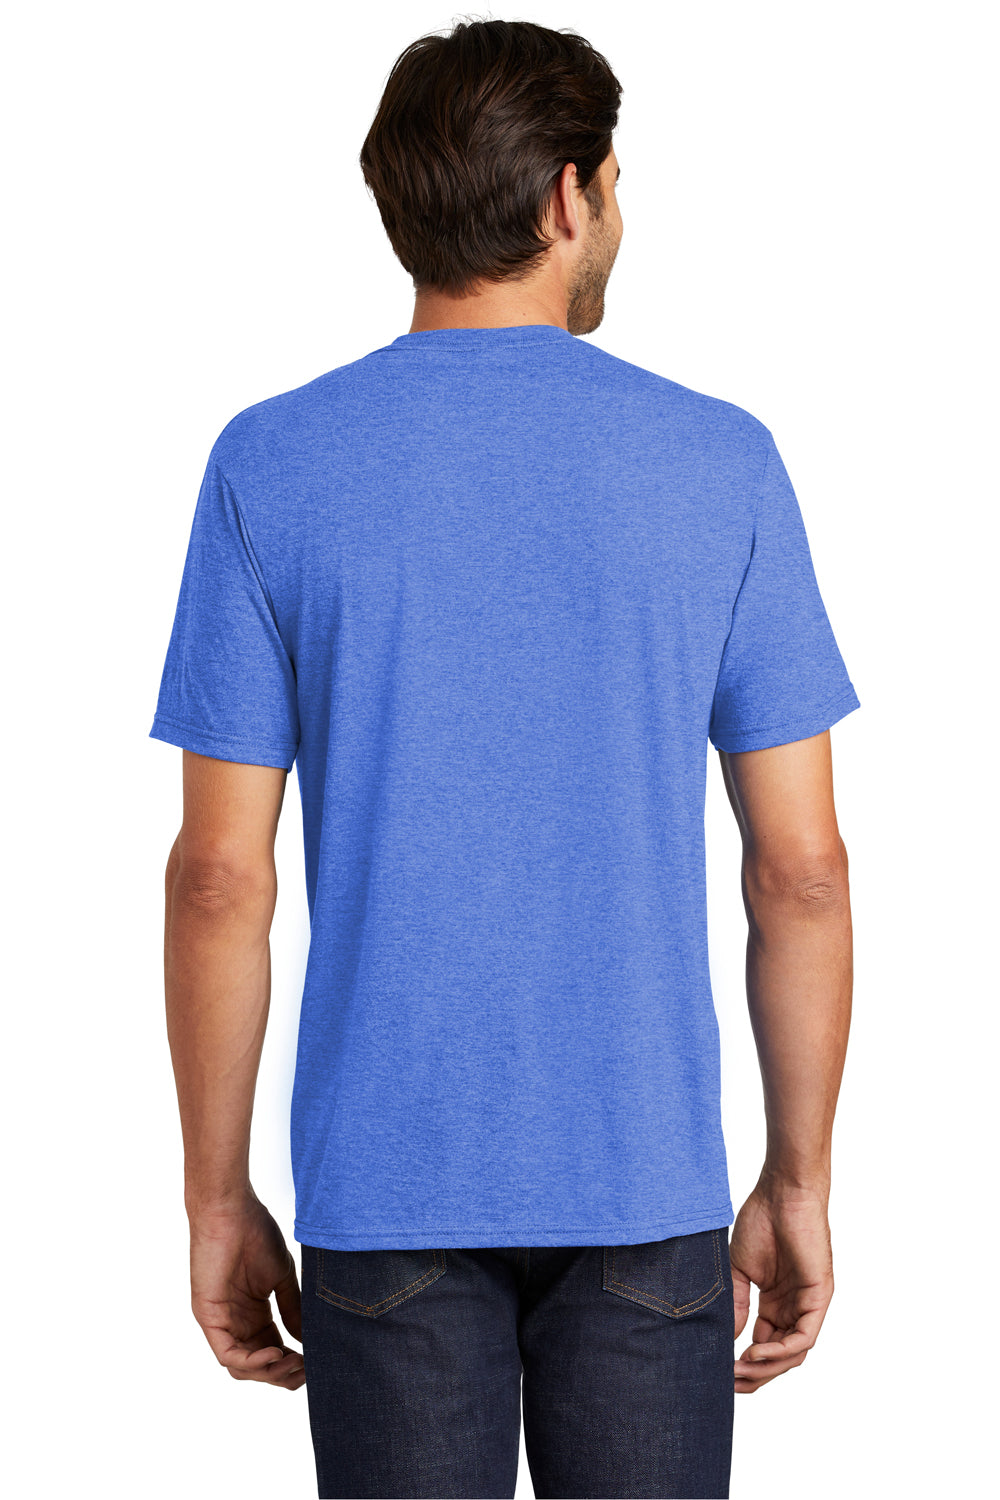 District DM130 Mens Perfect Tri Short Sleeve Crewneck T-Shirt Royal Blue Frost Back